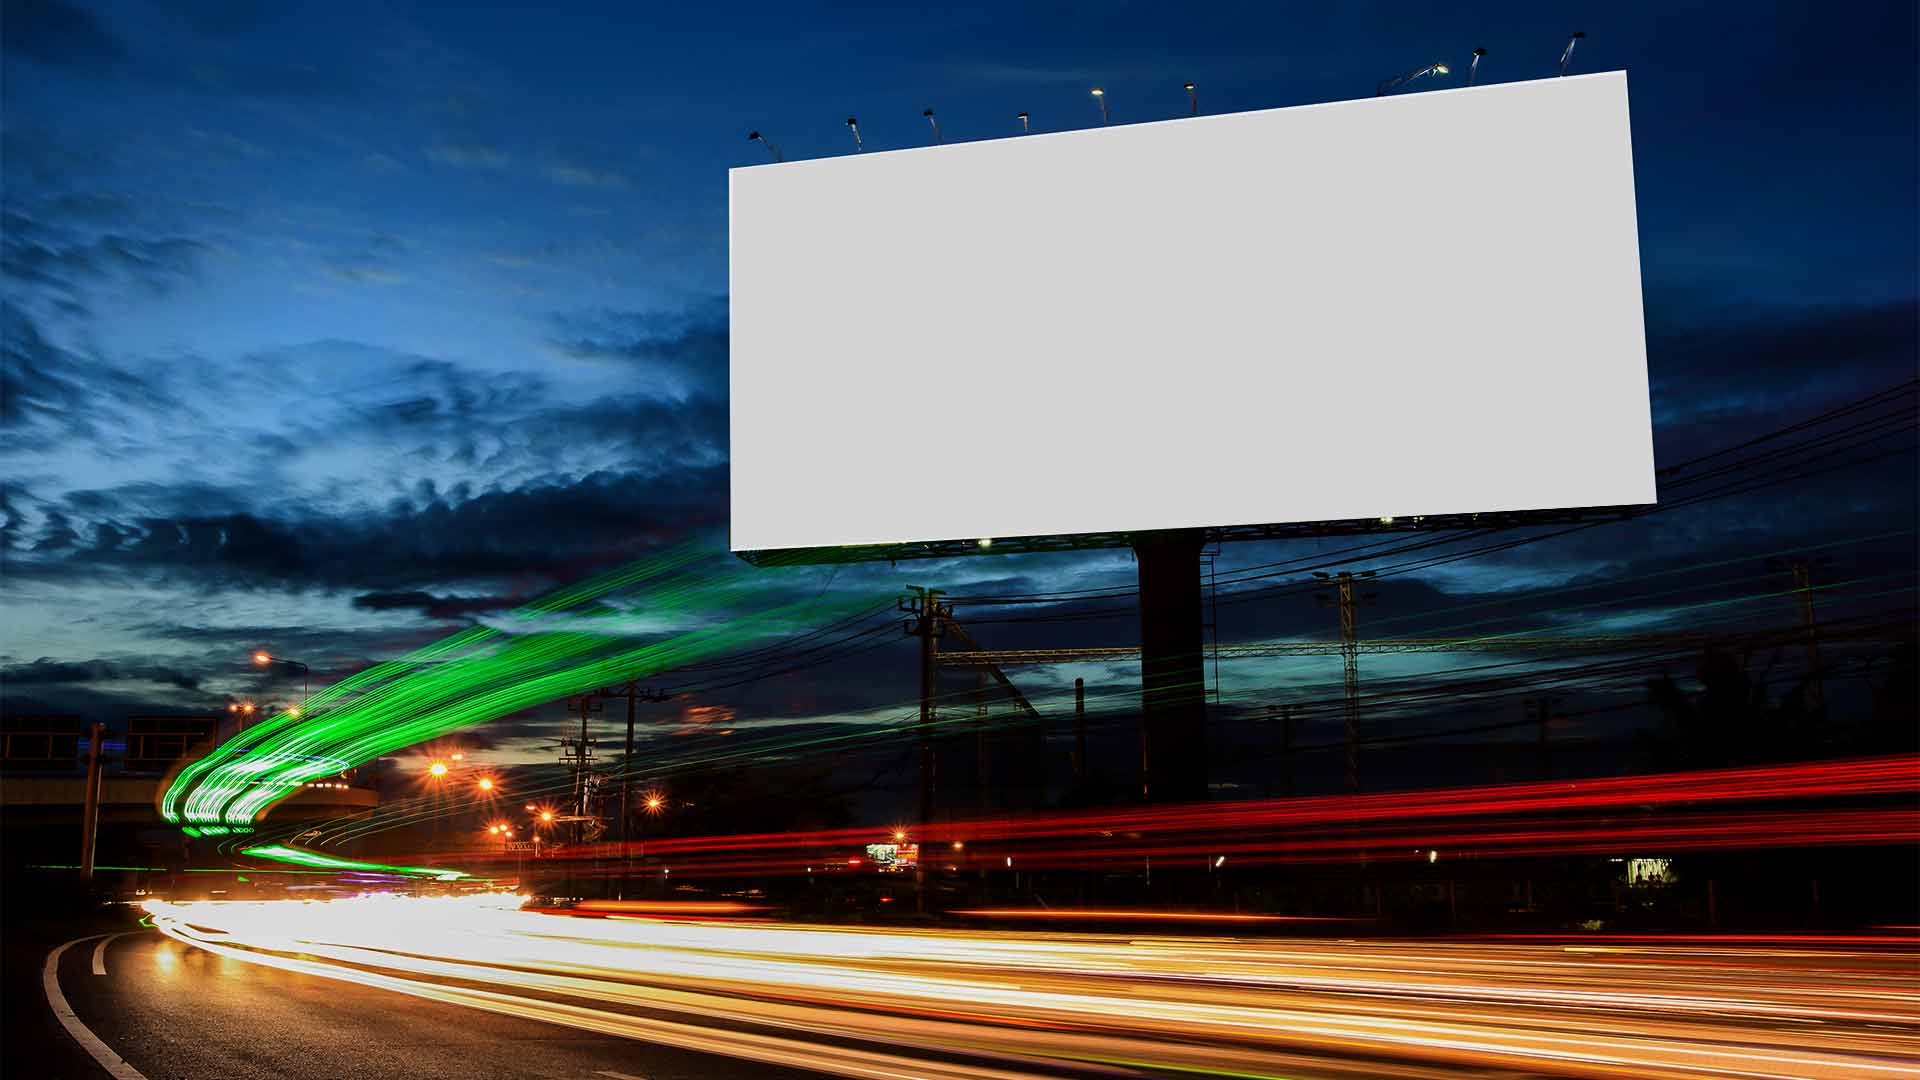 billboard-blank-outdoor-advertising-poster-night_1920x1080_shutterstock ...